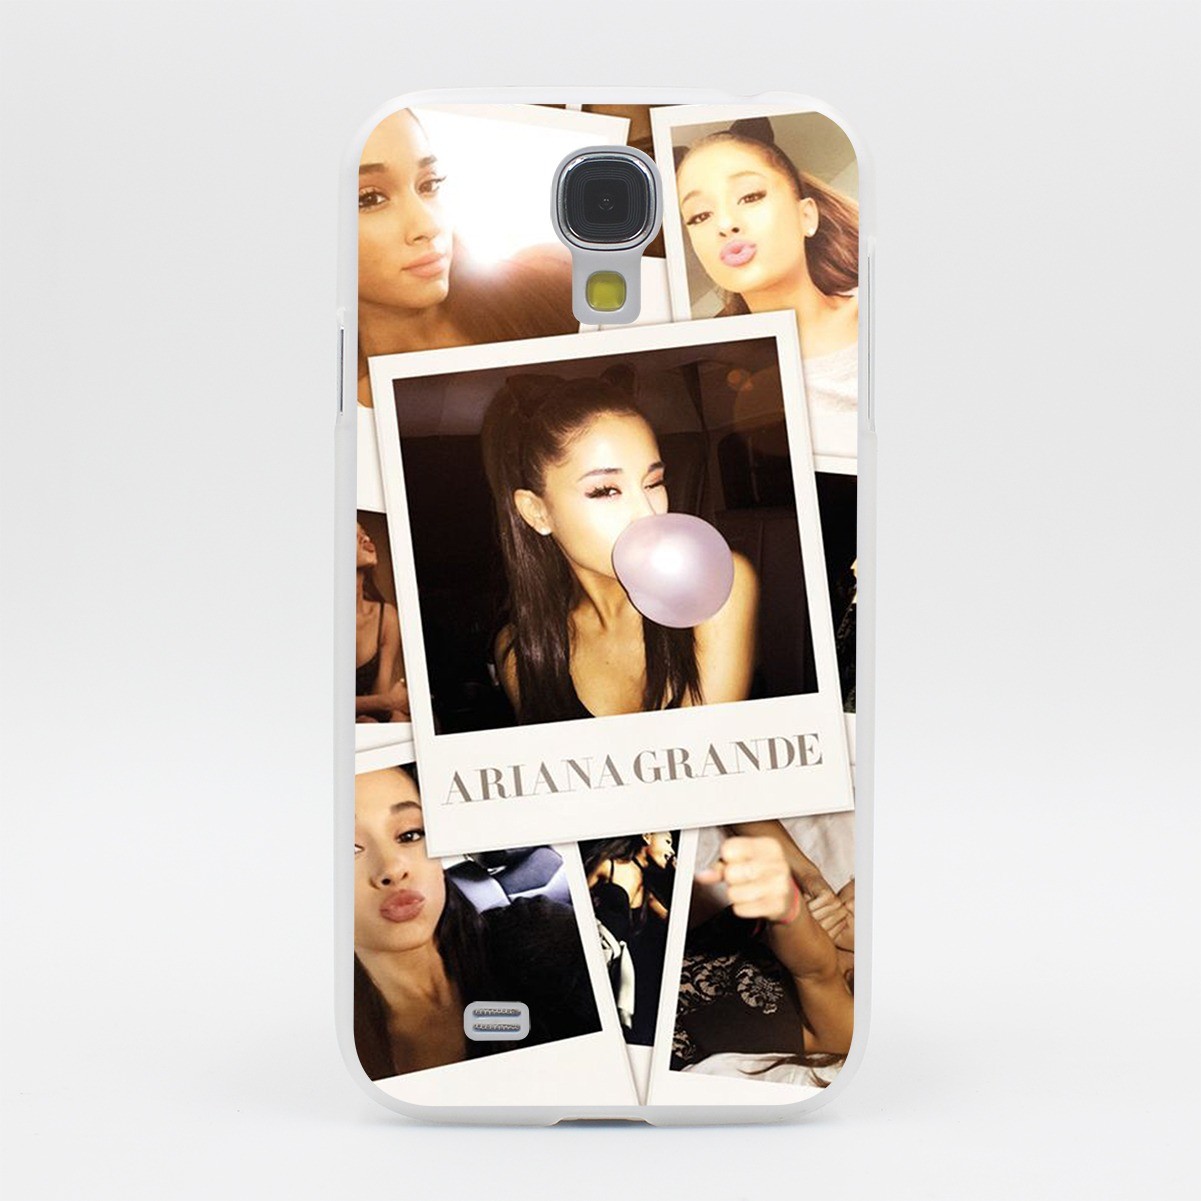 2 6 - Ariana Grande Store